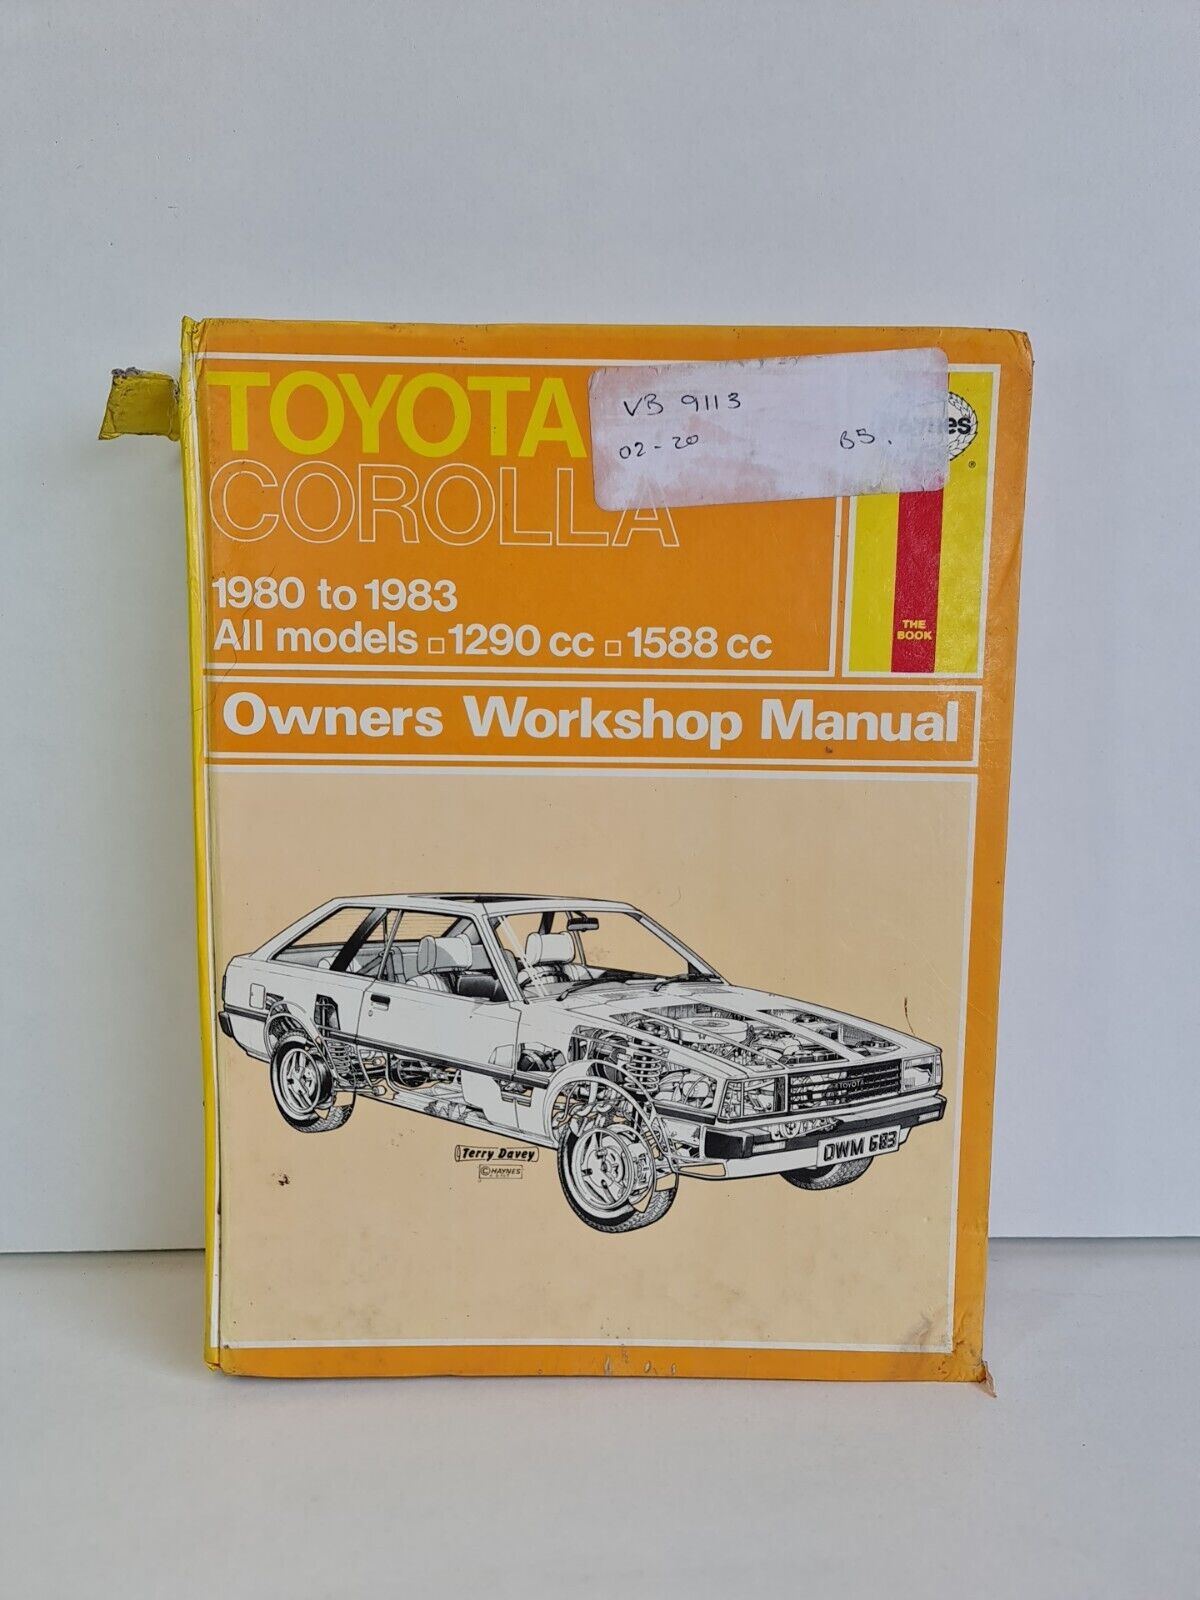 Haynes Manual - Toyota Corolla 1980 to 1983 (1983)